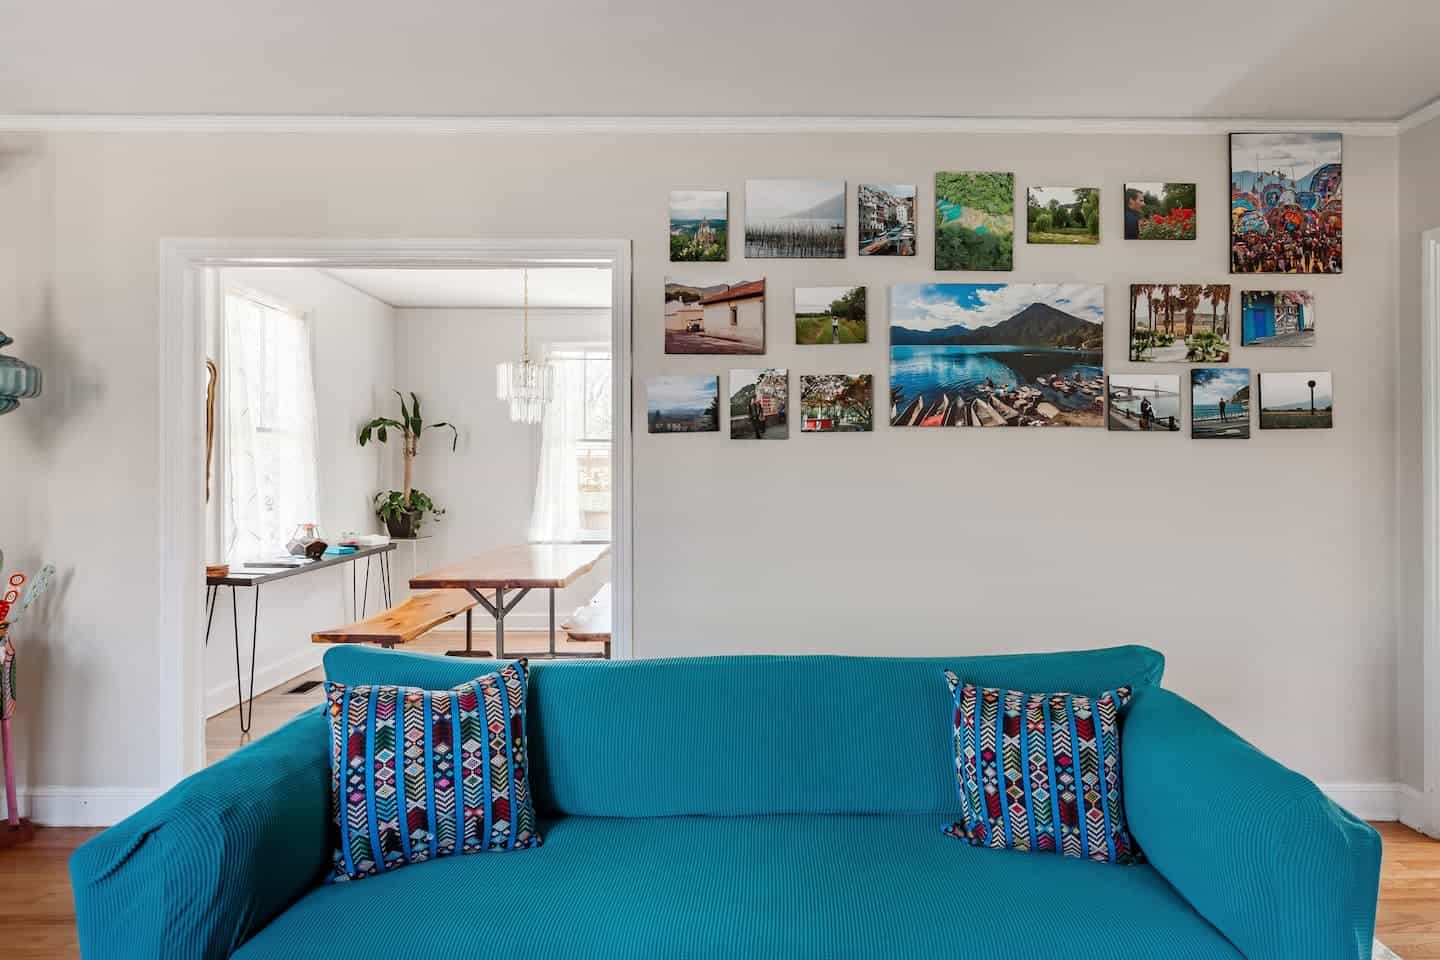 Image of Airbnb rental in Athens, Georgia